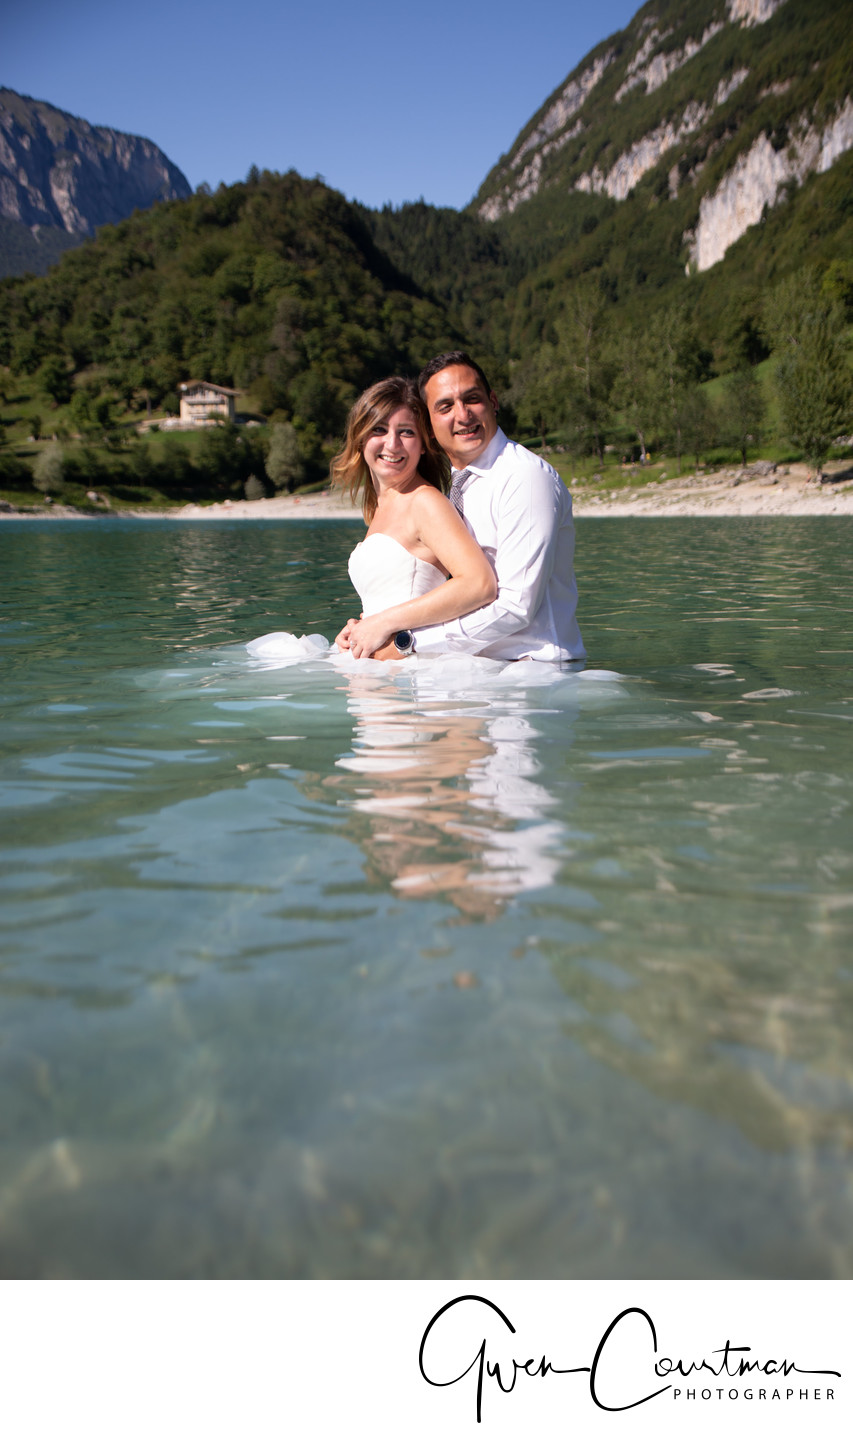 Fun Drown the gown photos in Italy, Lake Garda